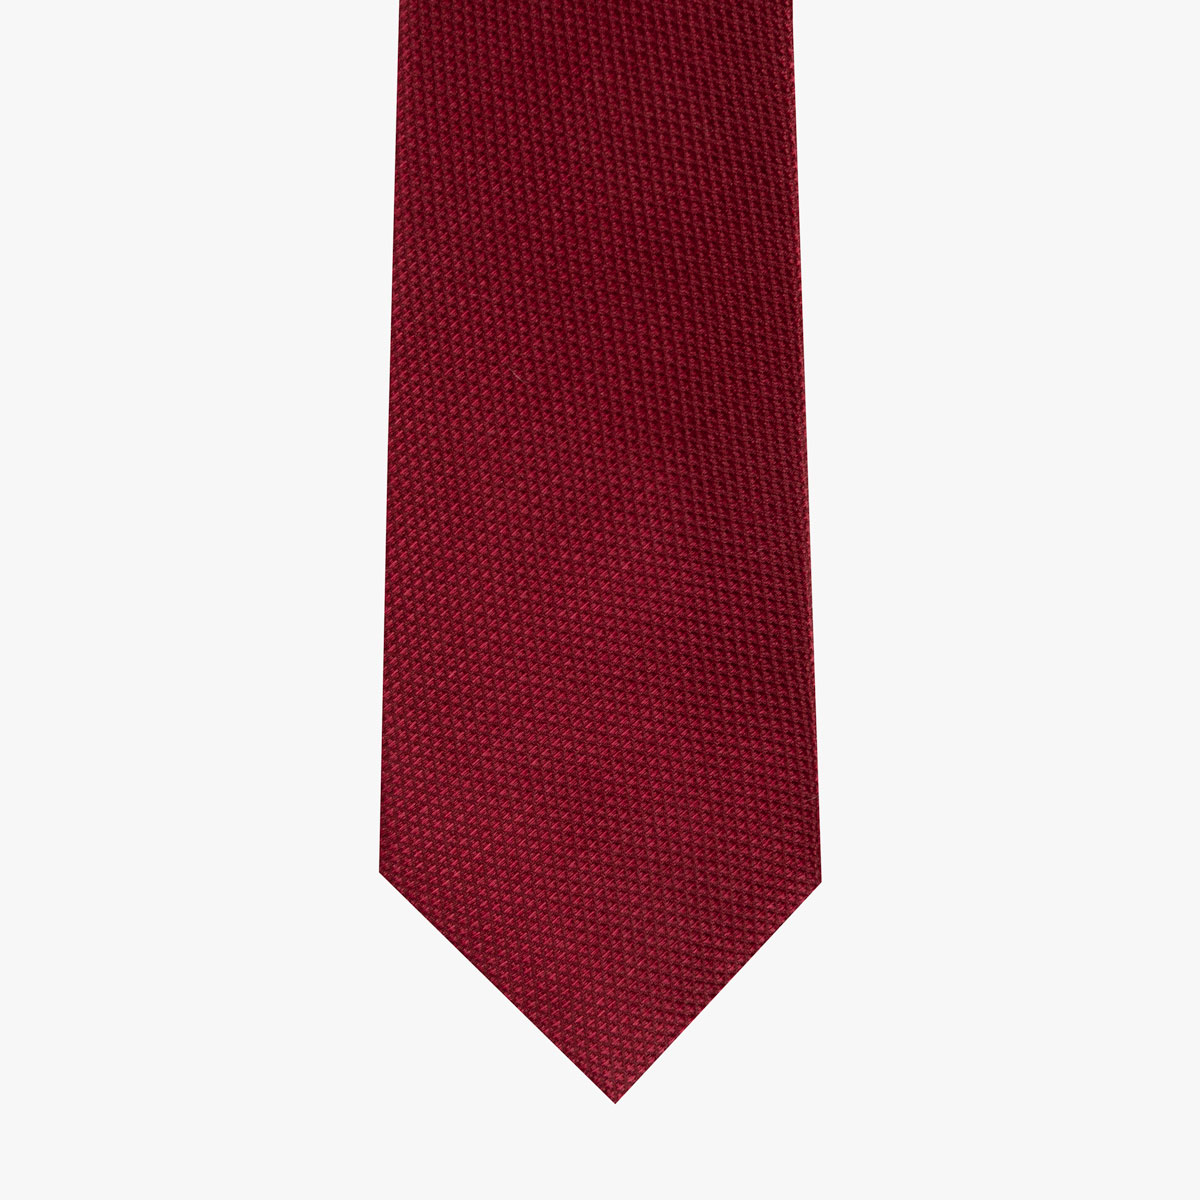 Krawatte in dunkelrot - Slim